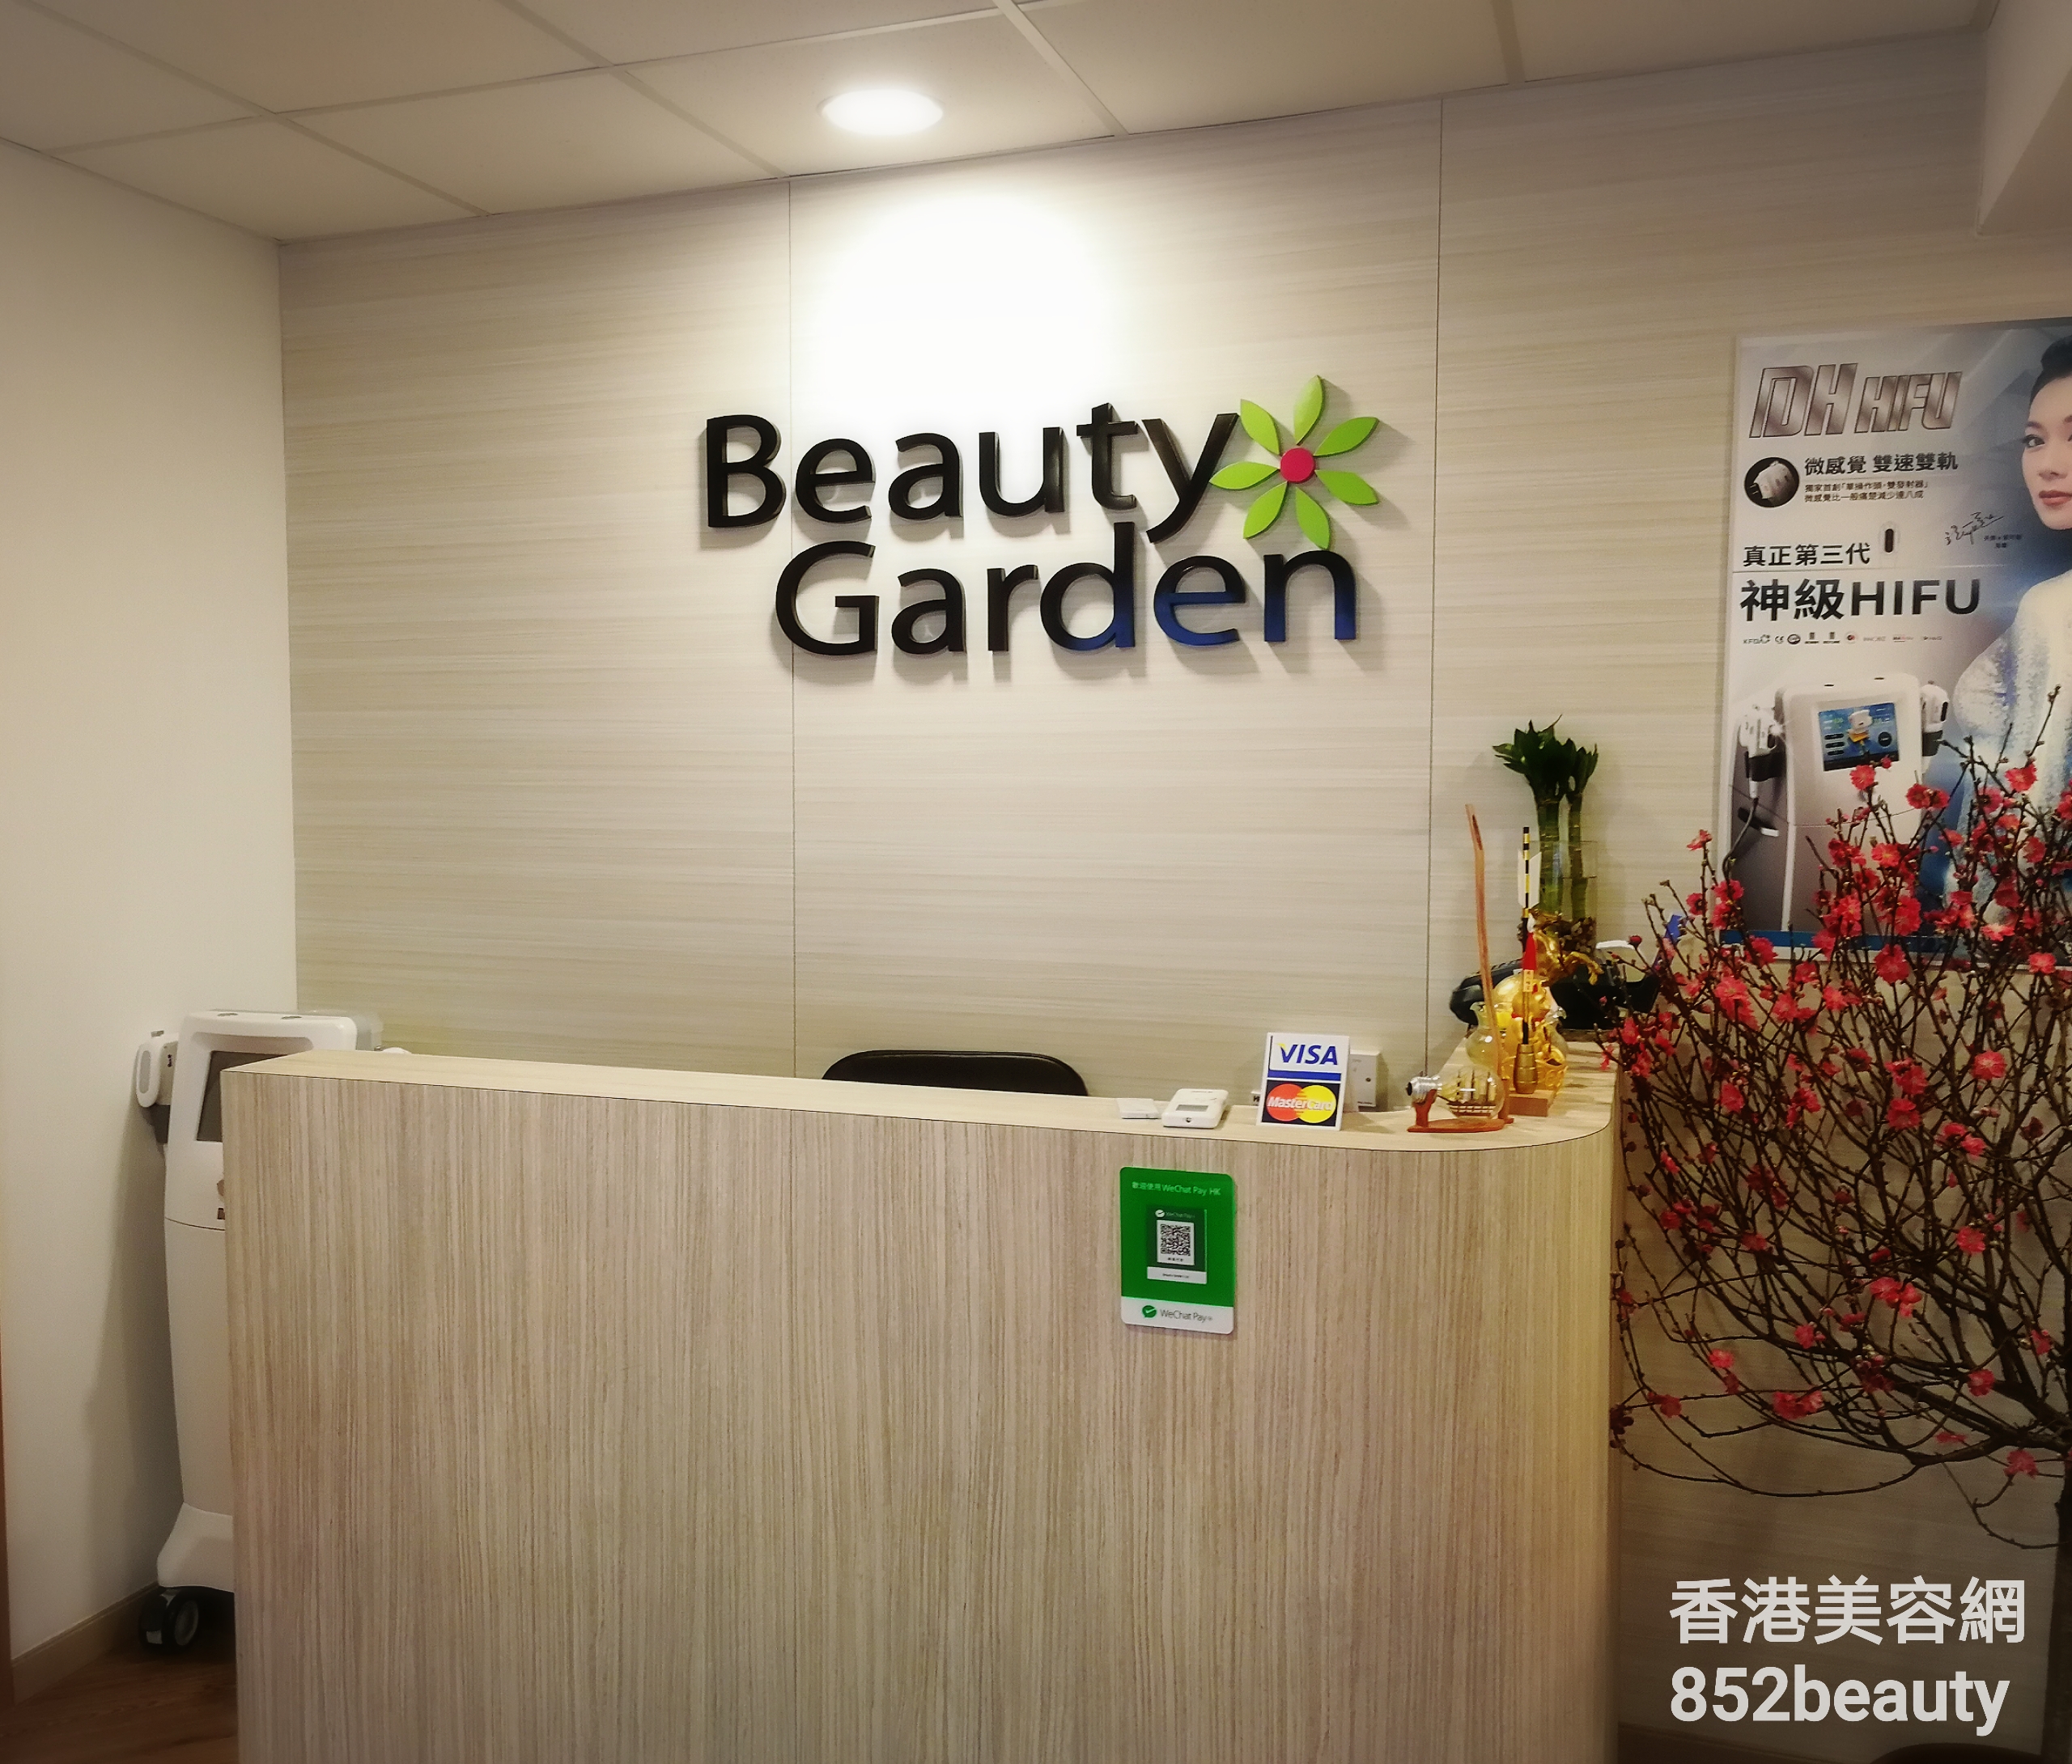 Hong Kong Beauty Salon User: 